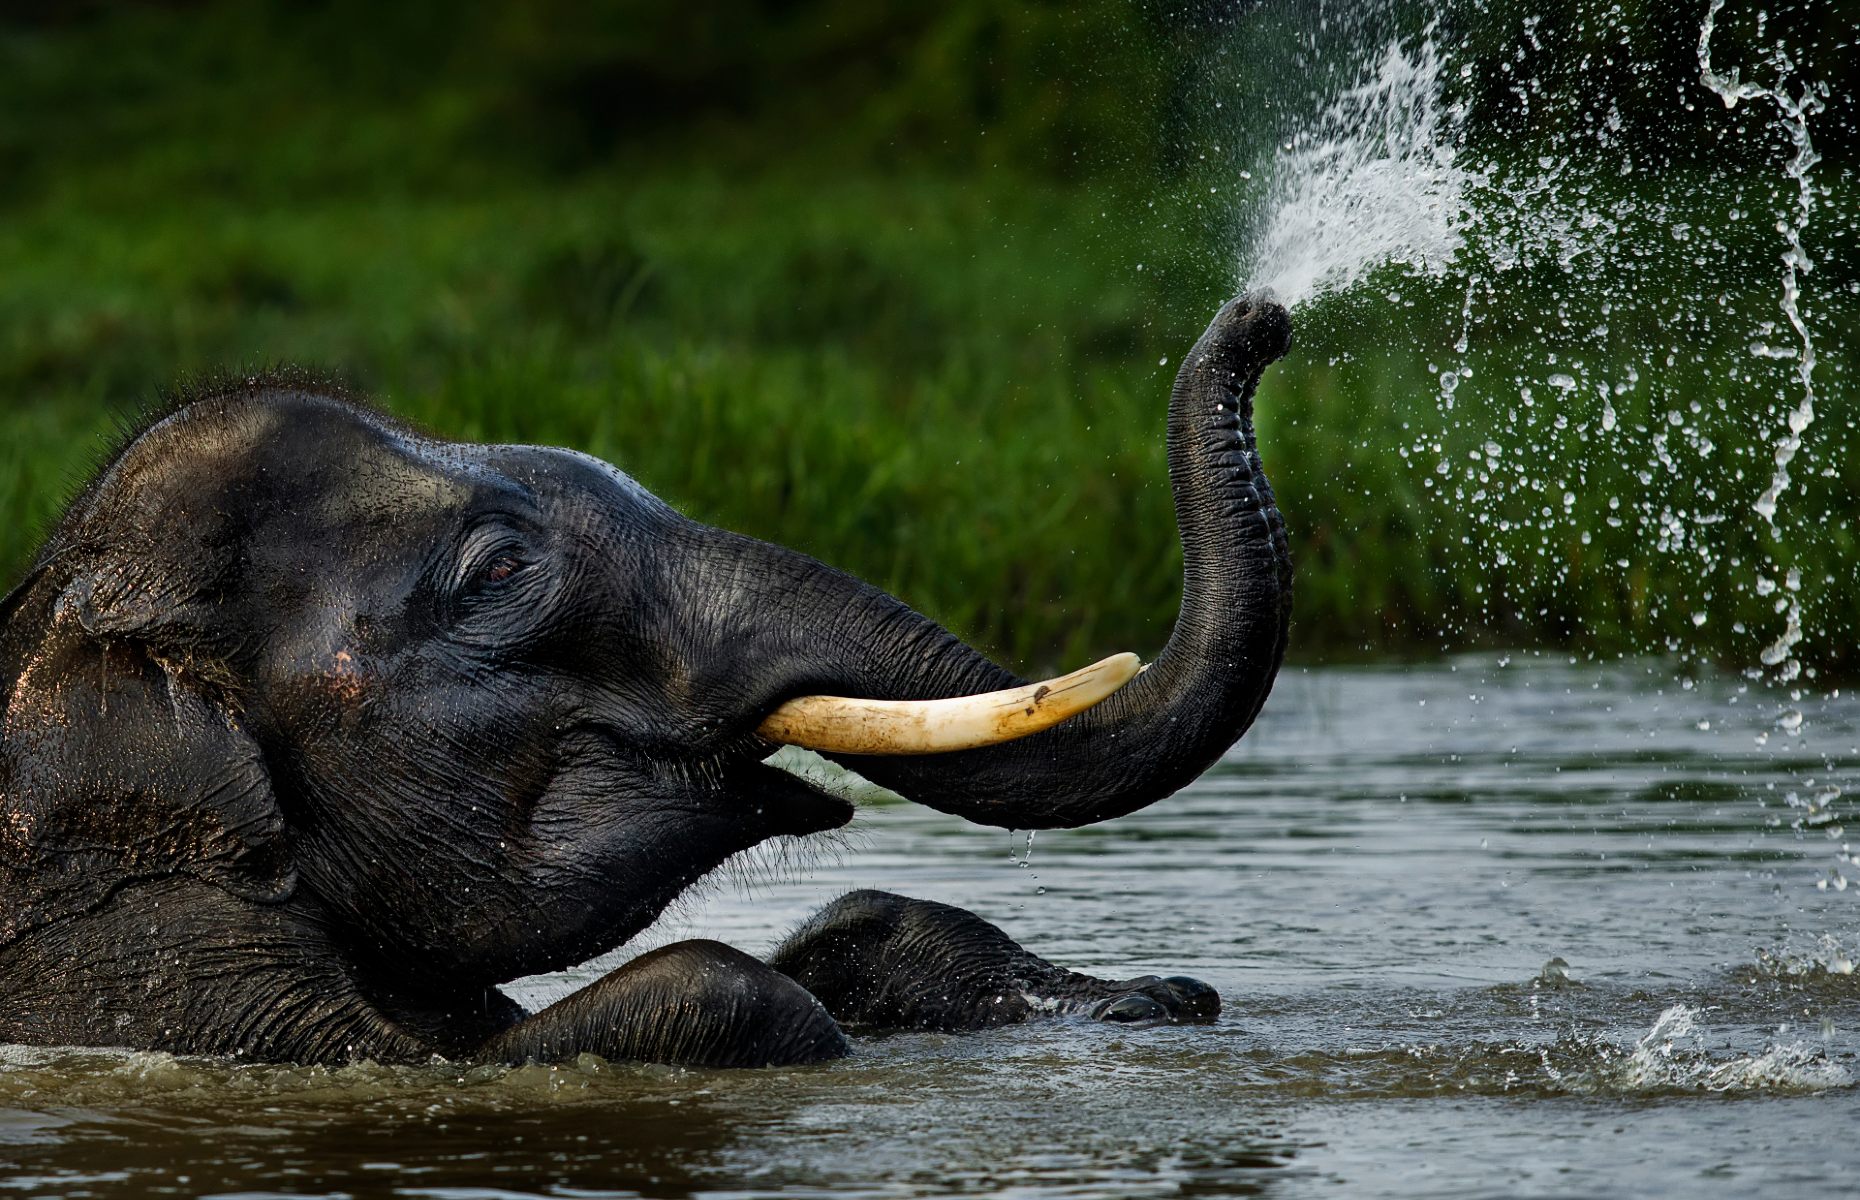 Sumatran elephant (Image: Sofyan efendi/Shutterstock)